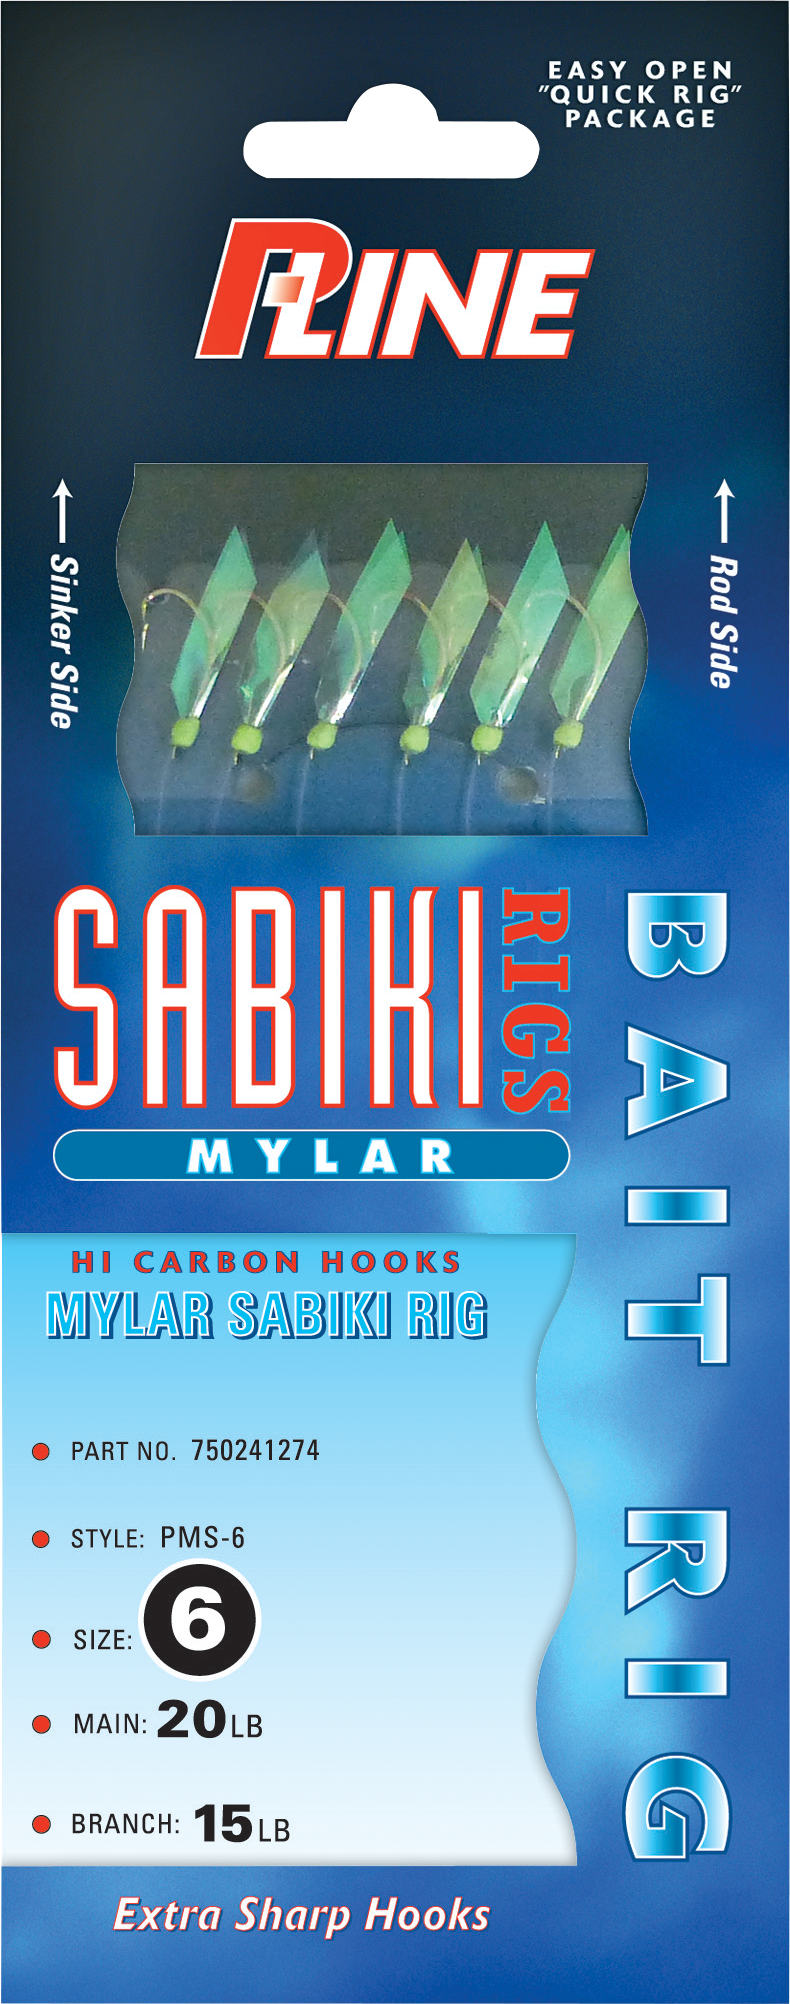 P-Line Mylar Sabiki Rigs - 14